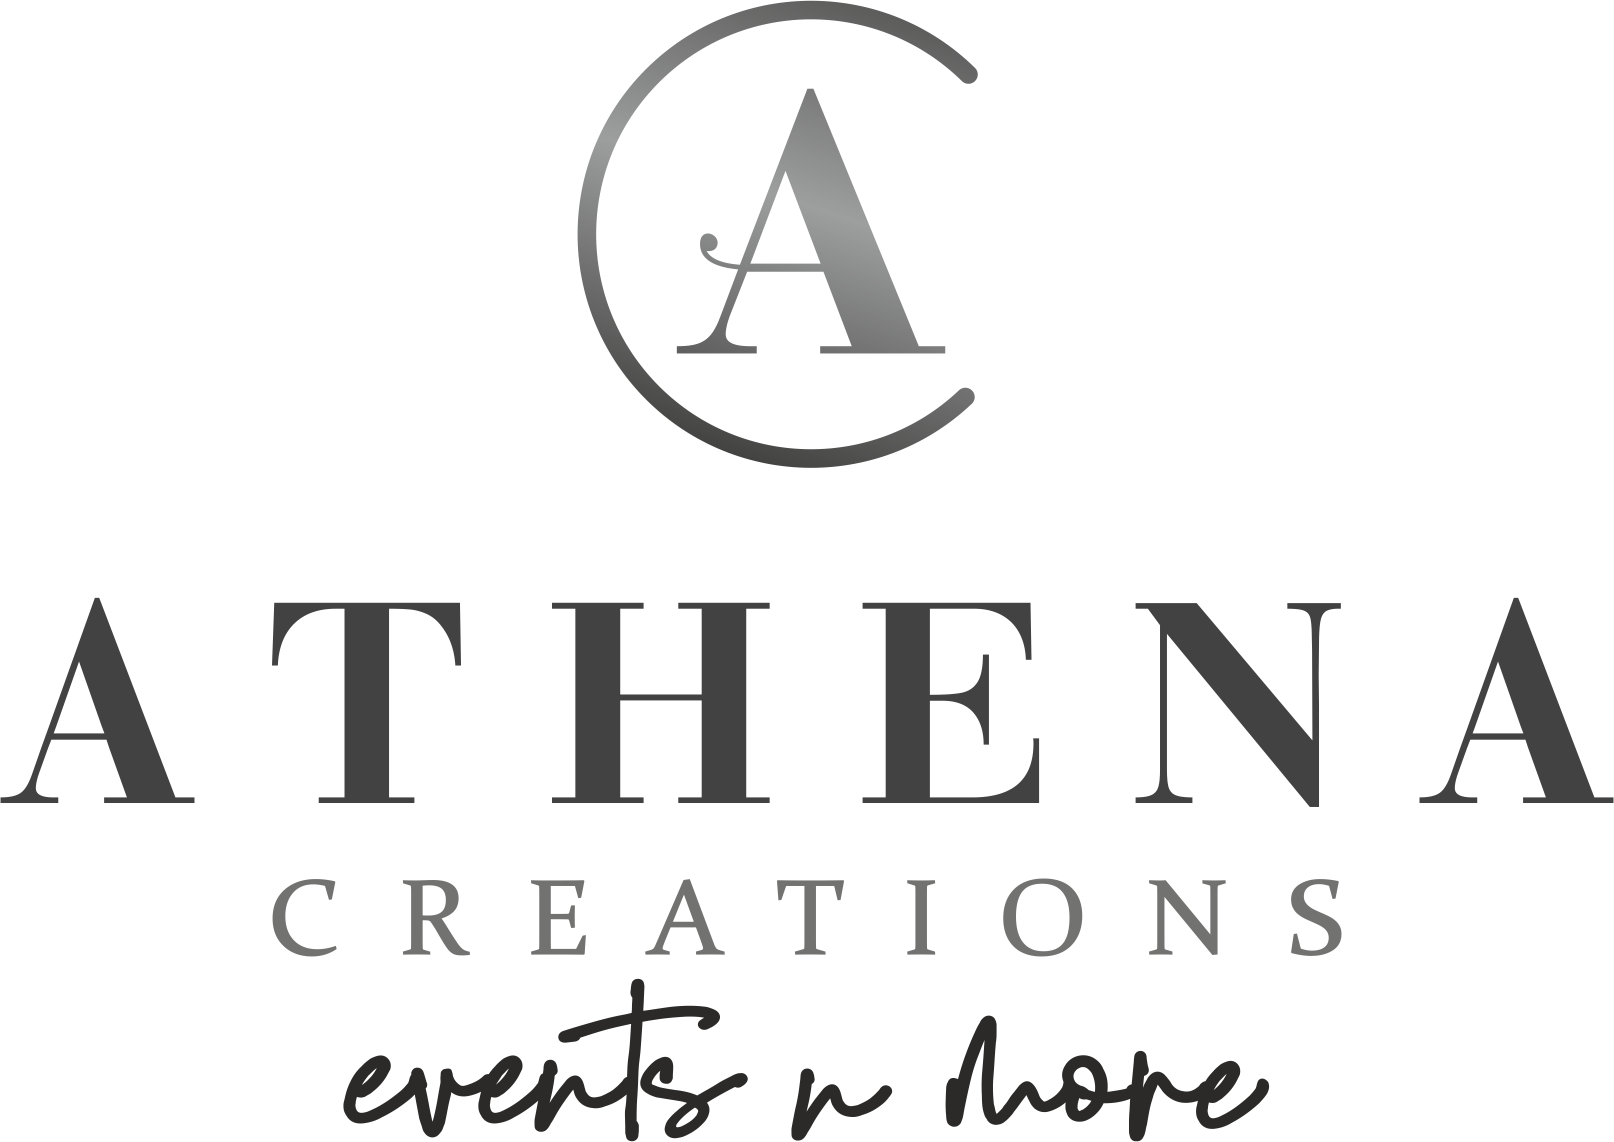 logo_athena-creations-v1.png